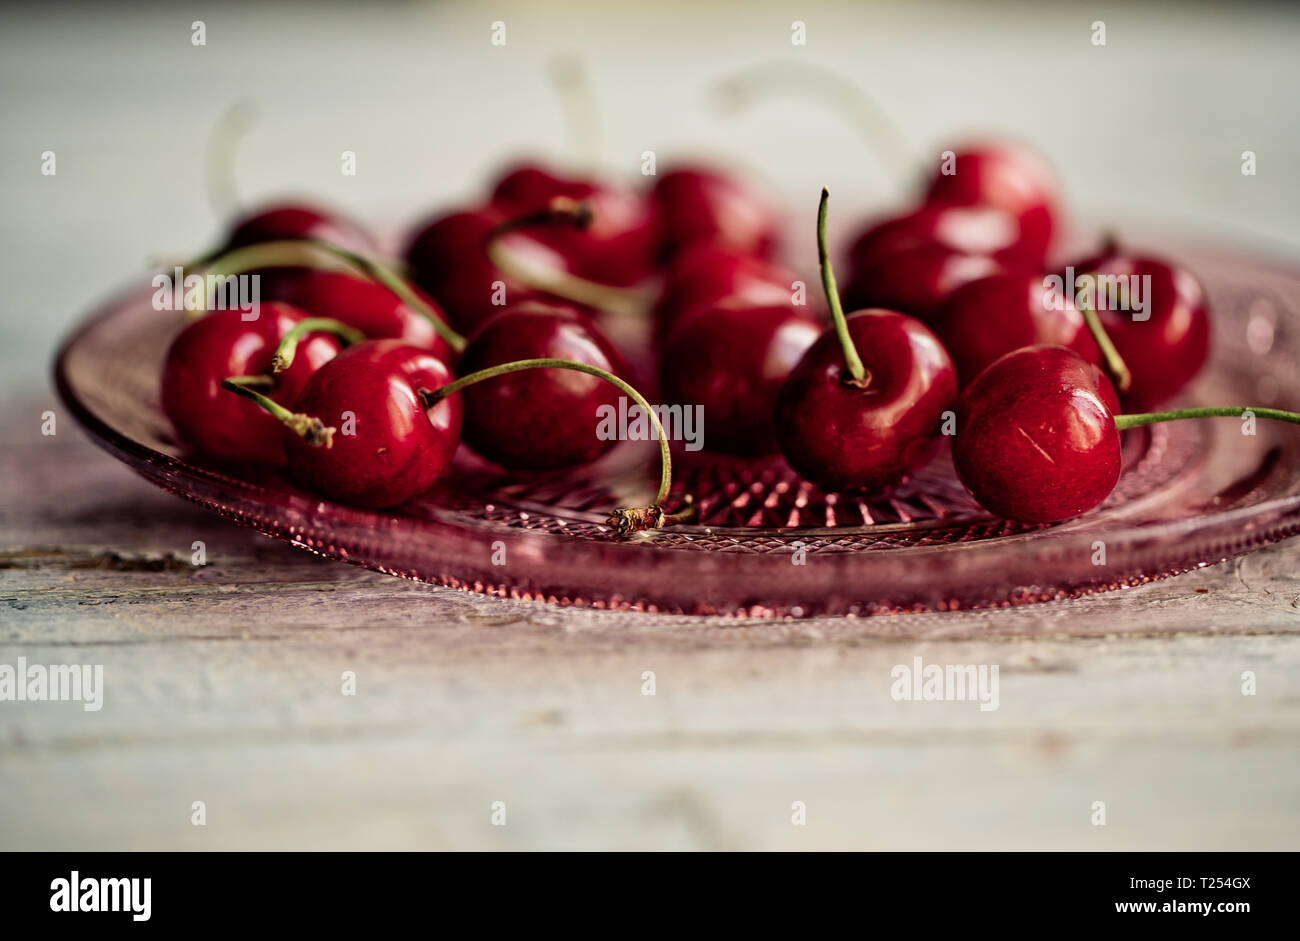 Ripe and bright red sweet cherries Stock Photo